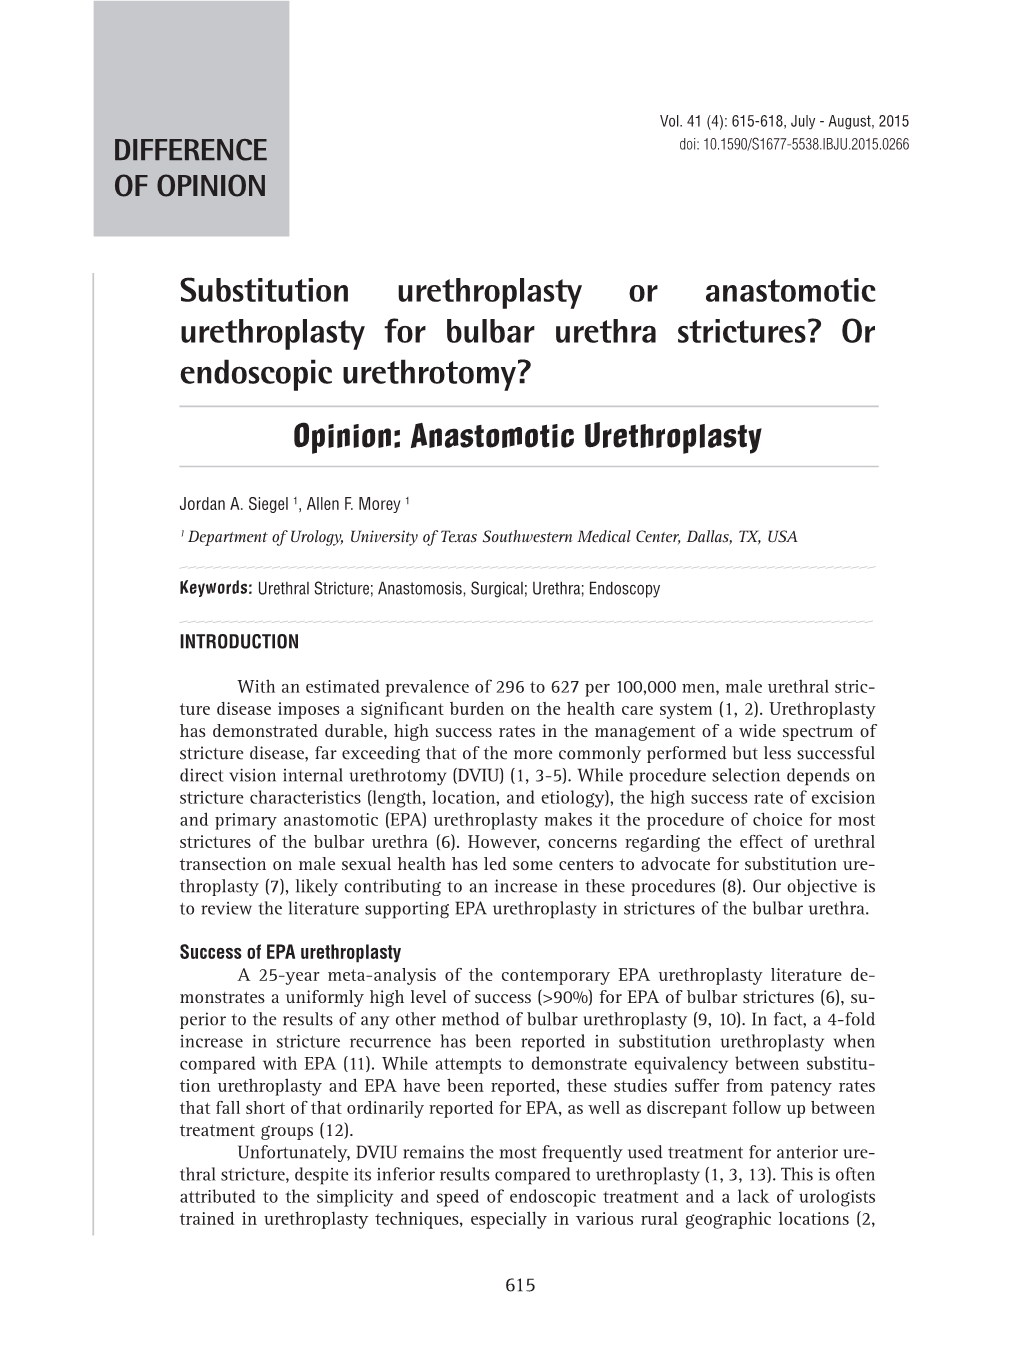 Substitution Urethroplasty Or Anastomotic Urethroplasty for Bulbar Urethra Strictures? Or Endoscopic Urethrotomy?